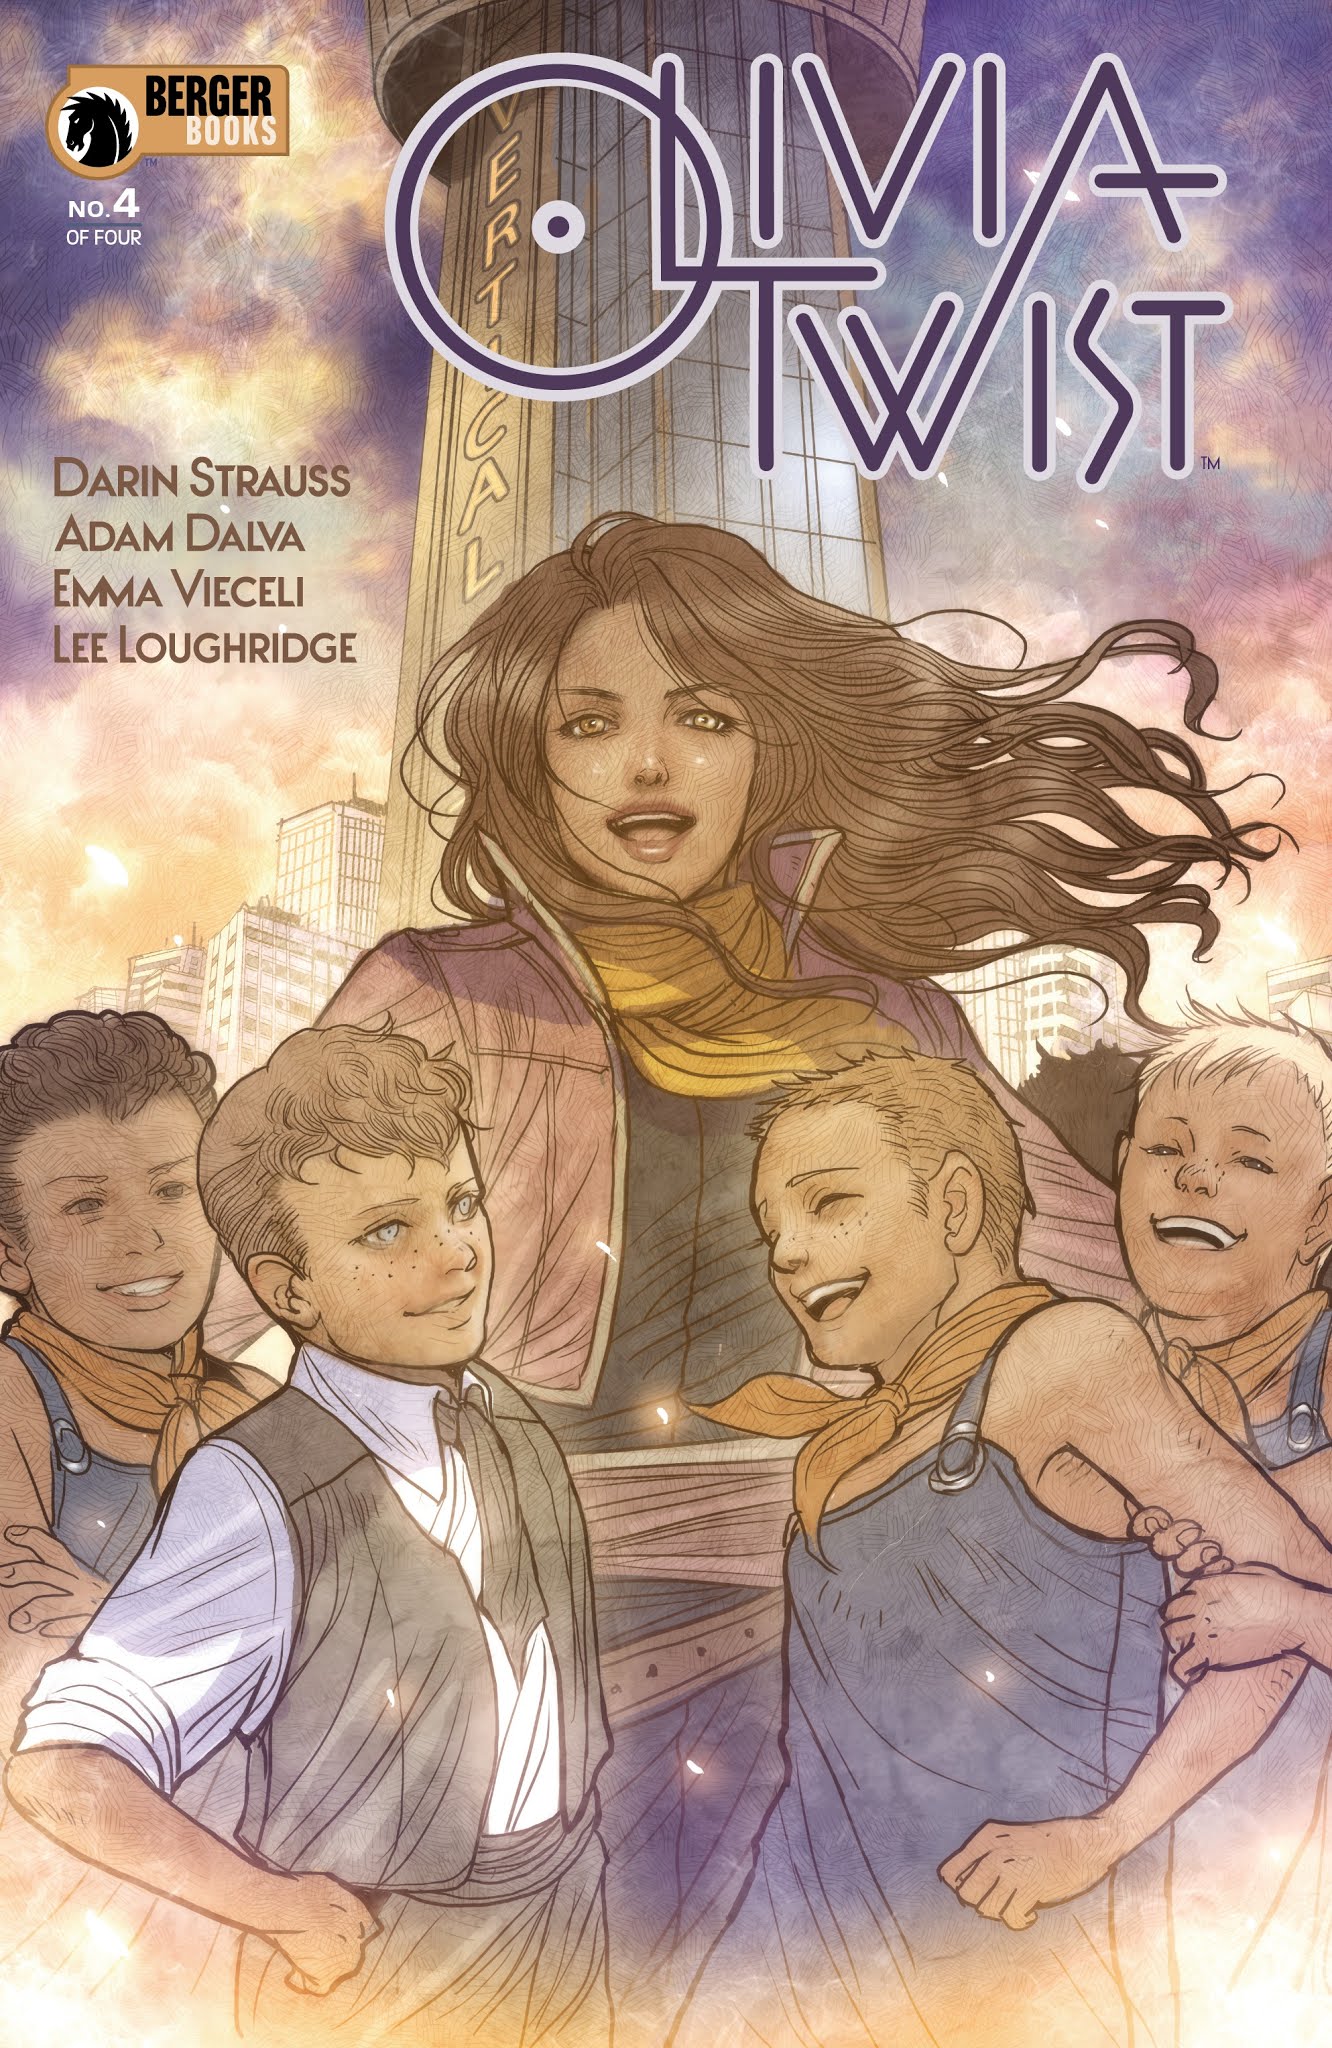 Read online Olivia Twist comic -  Issue #4 - 1